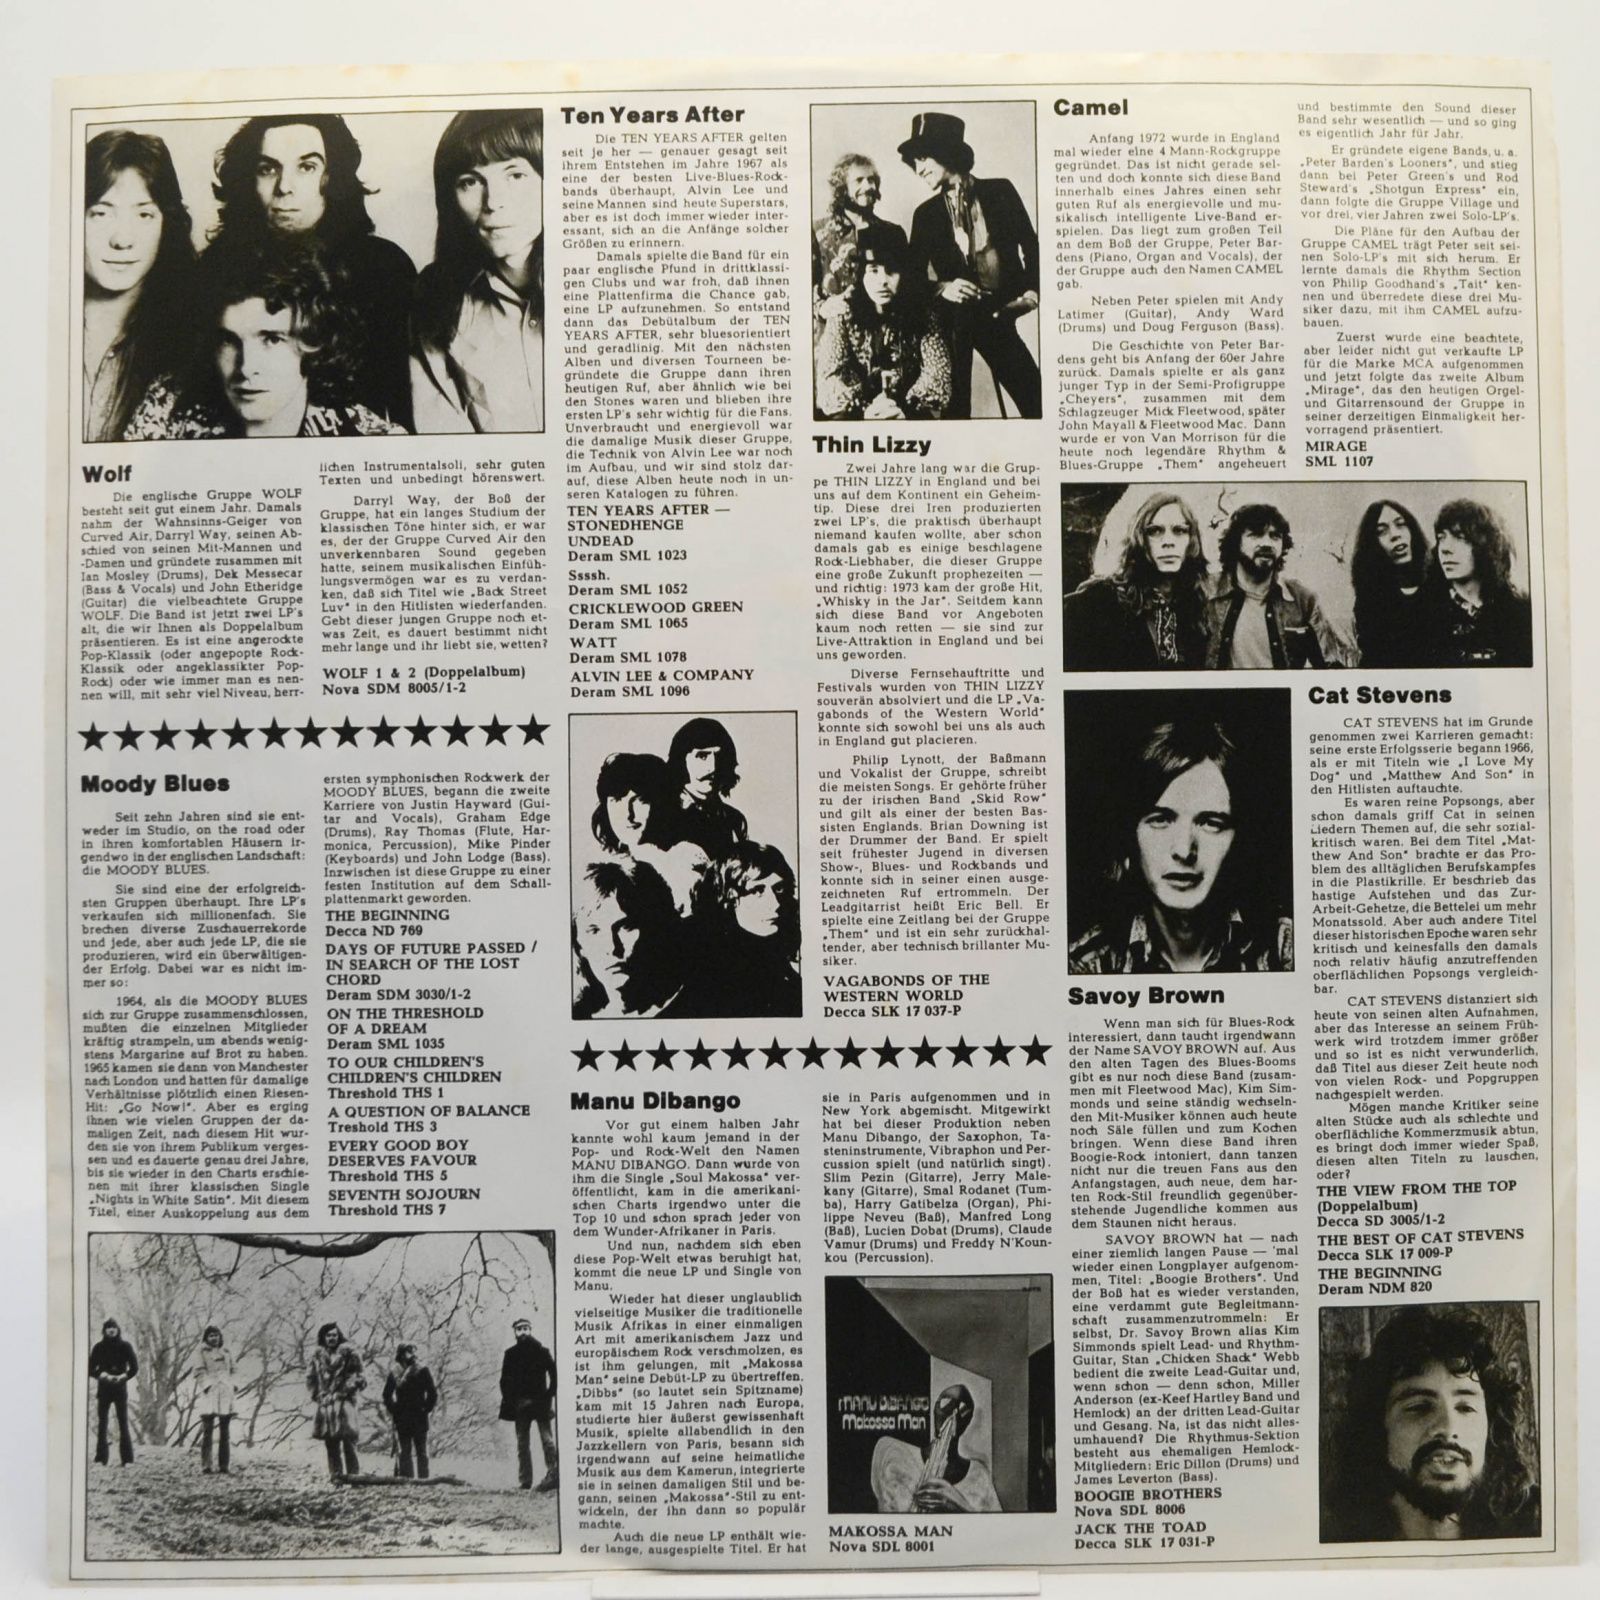 Rolling Stones — Through The Past, Darkly (Big Hits Vol. 2), 1969